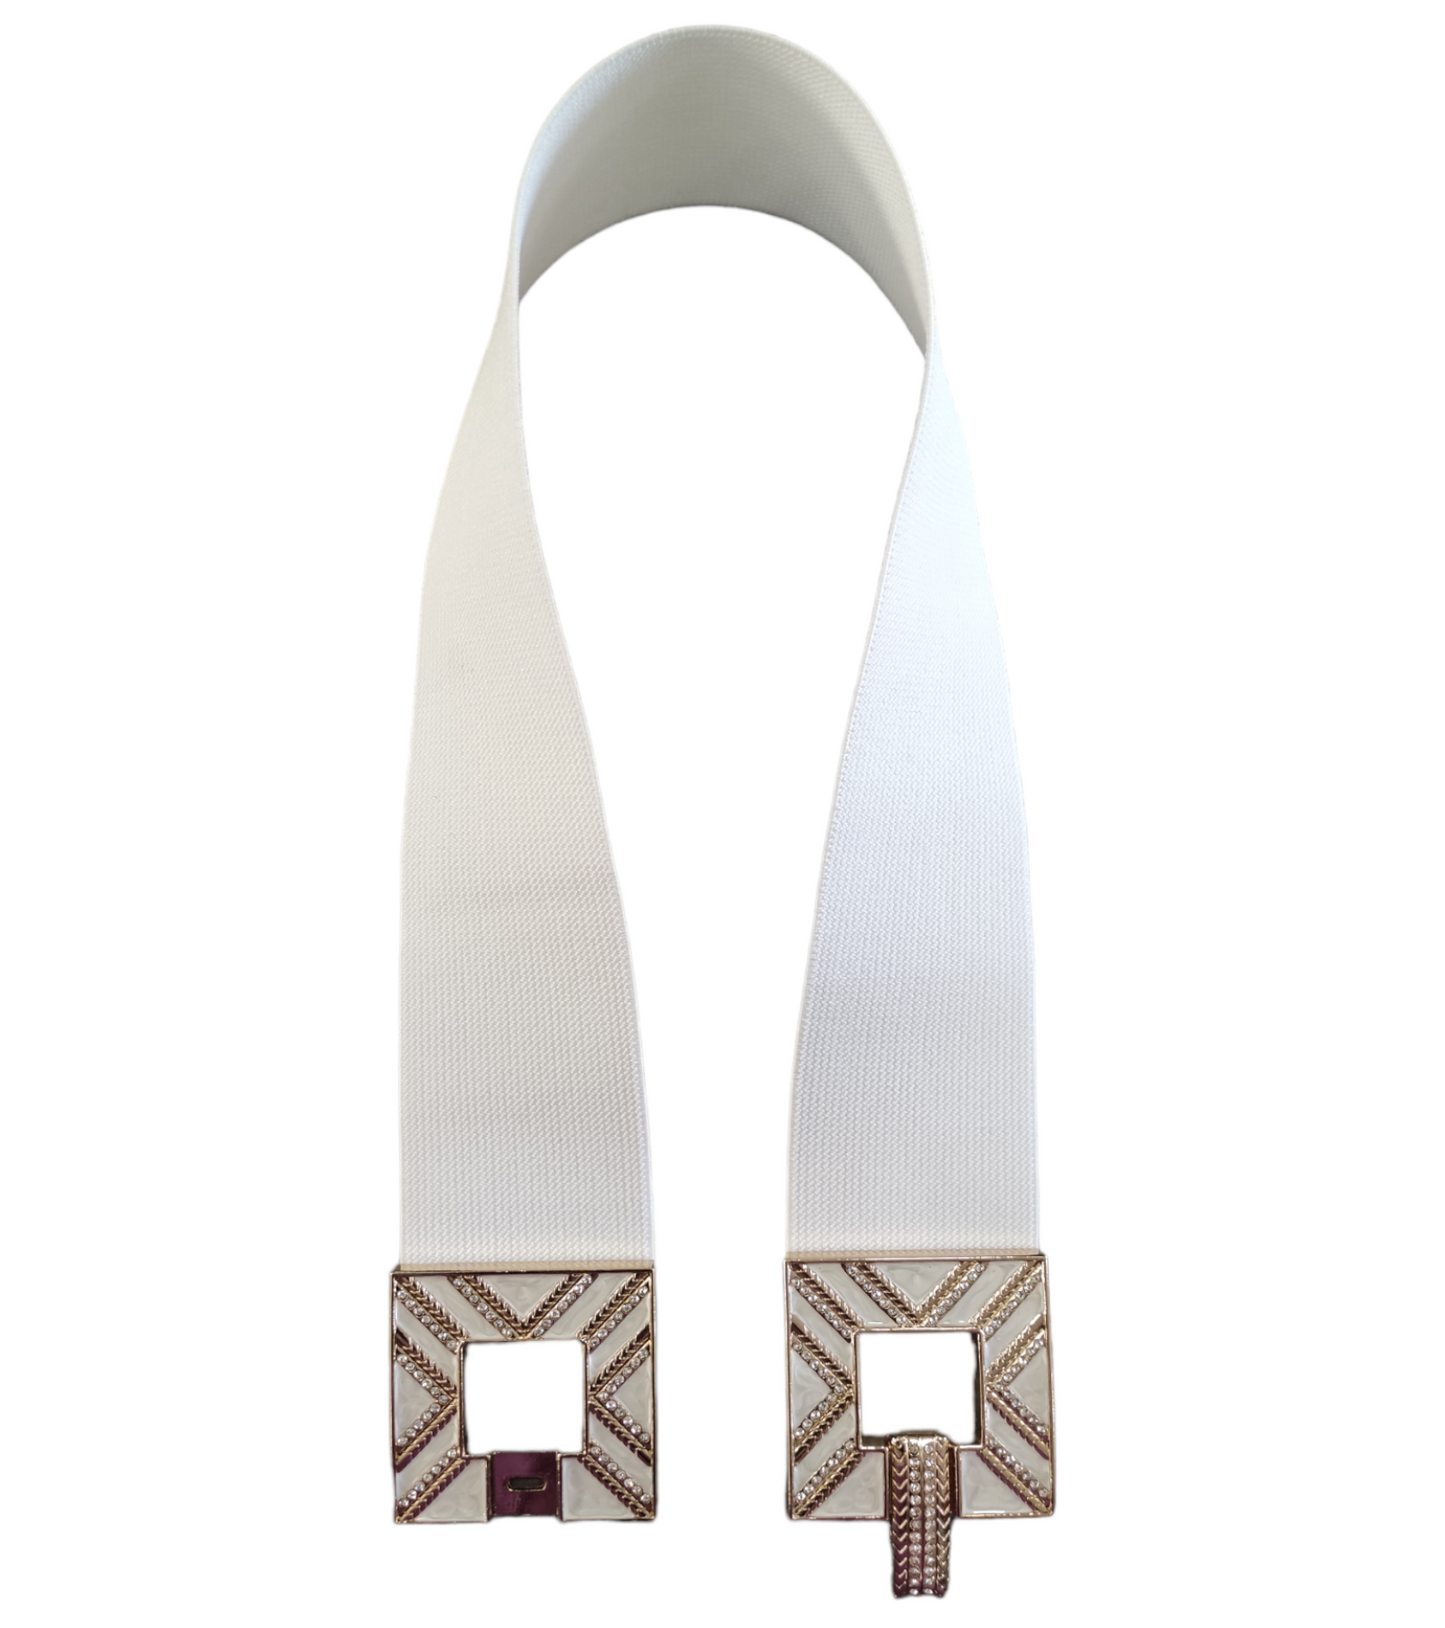 Cintura Donna Elastica a Doppia Fibbia CC Stringi Vita Lunghezza 70 cm